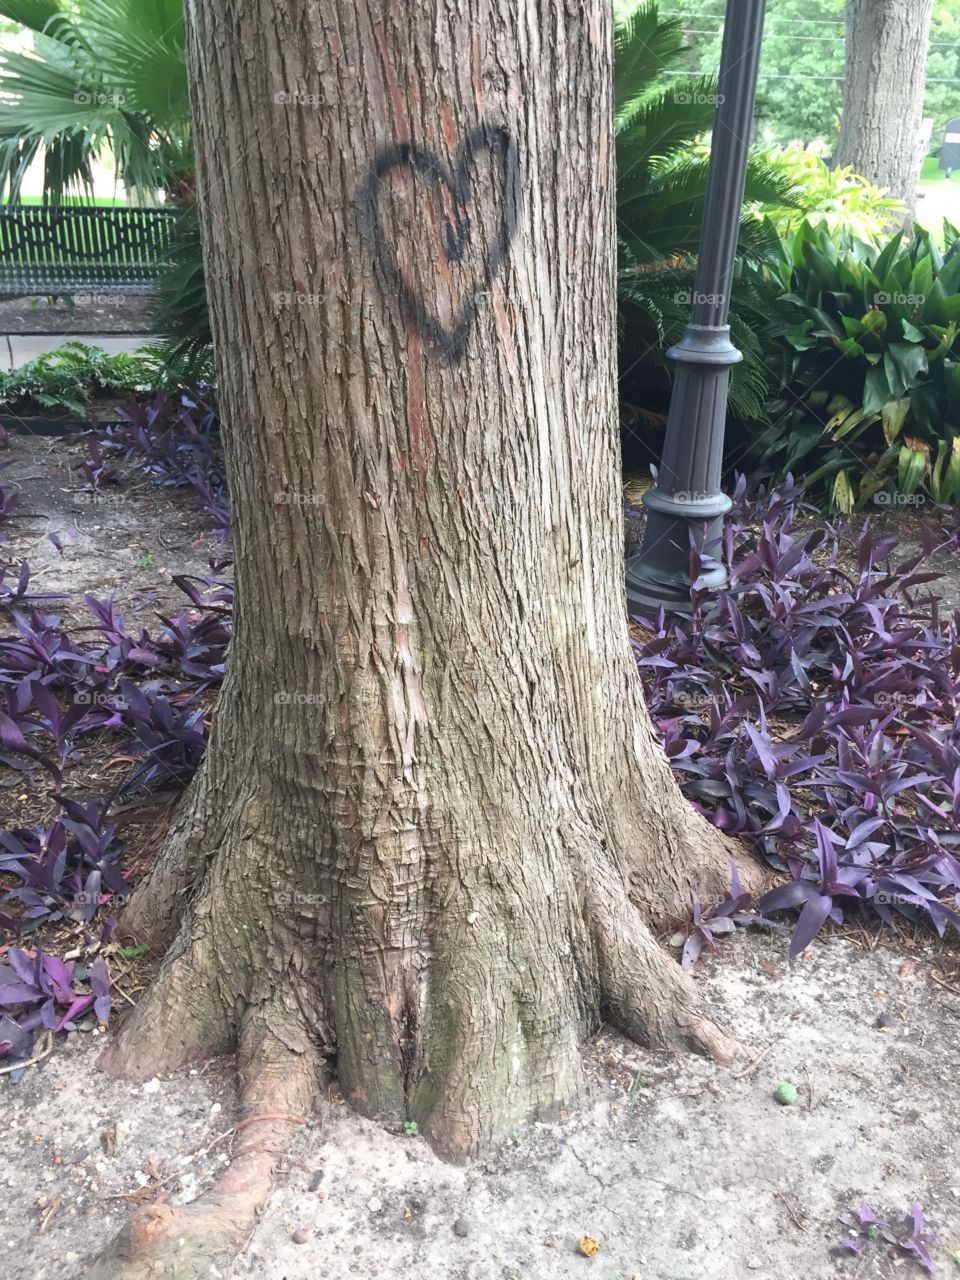 Tree with heart spray paint.